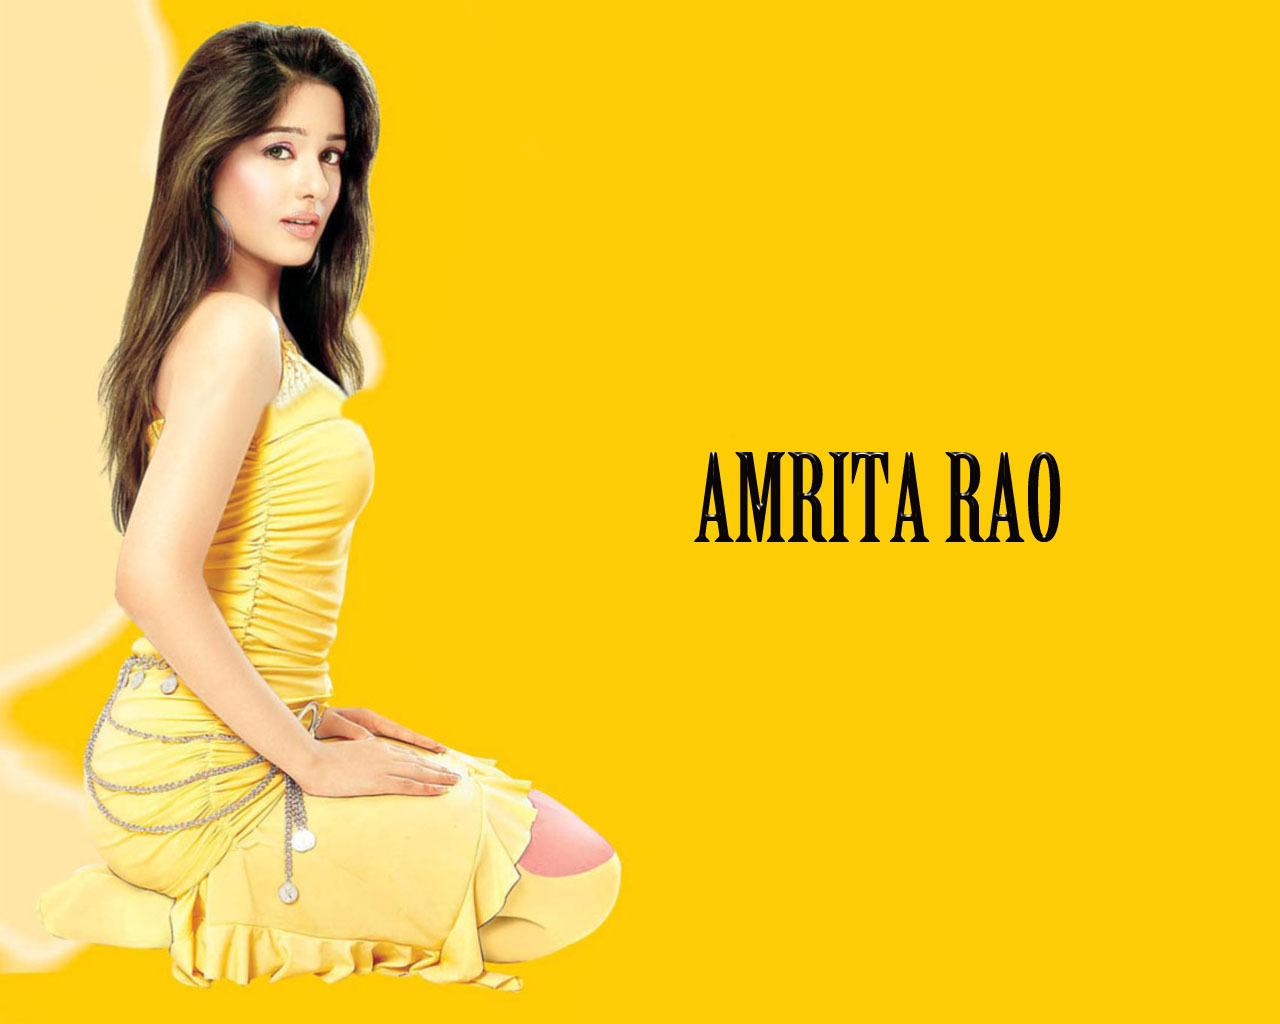 Amrita Rao image amrita aadi HD wallpaper and background photo